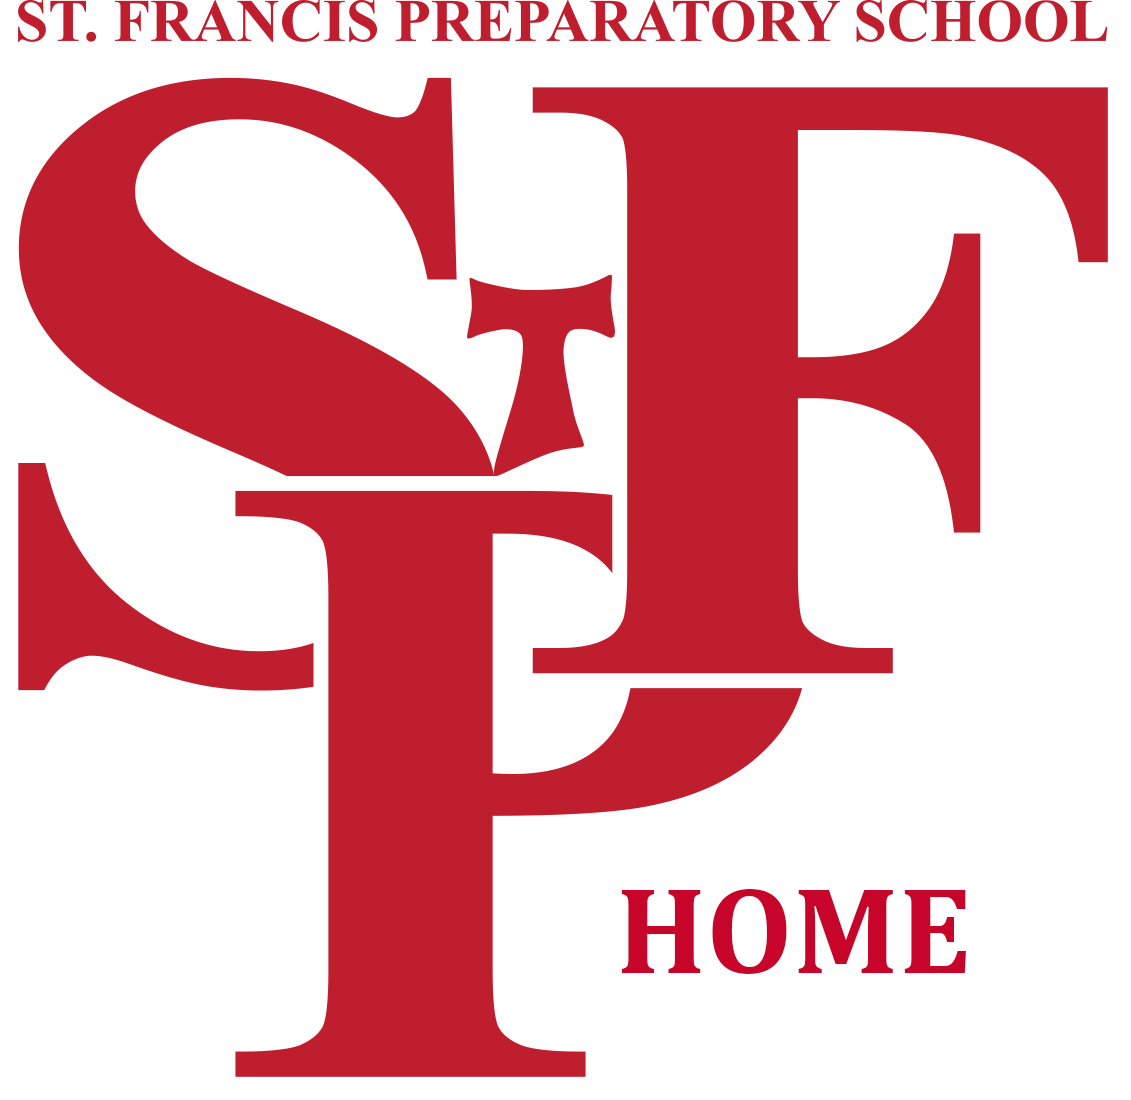 St. Francis Preparatory School